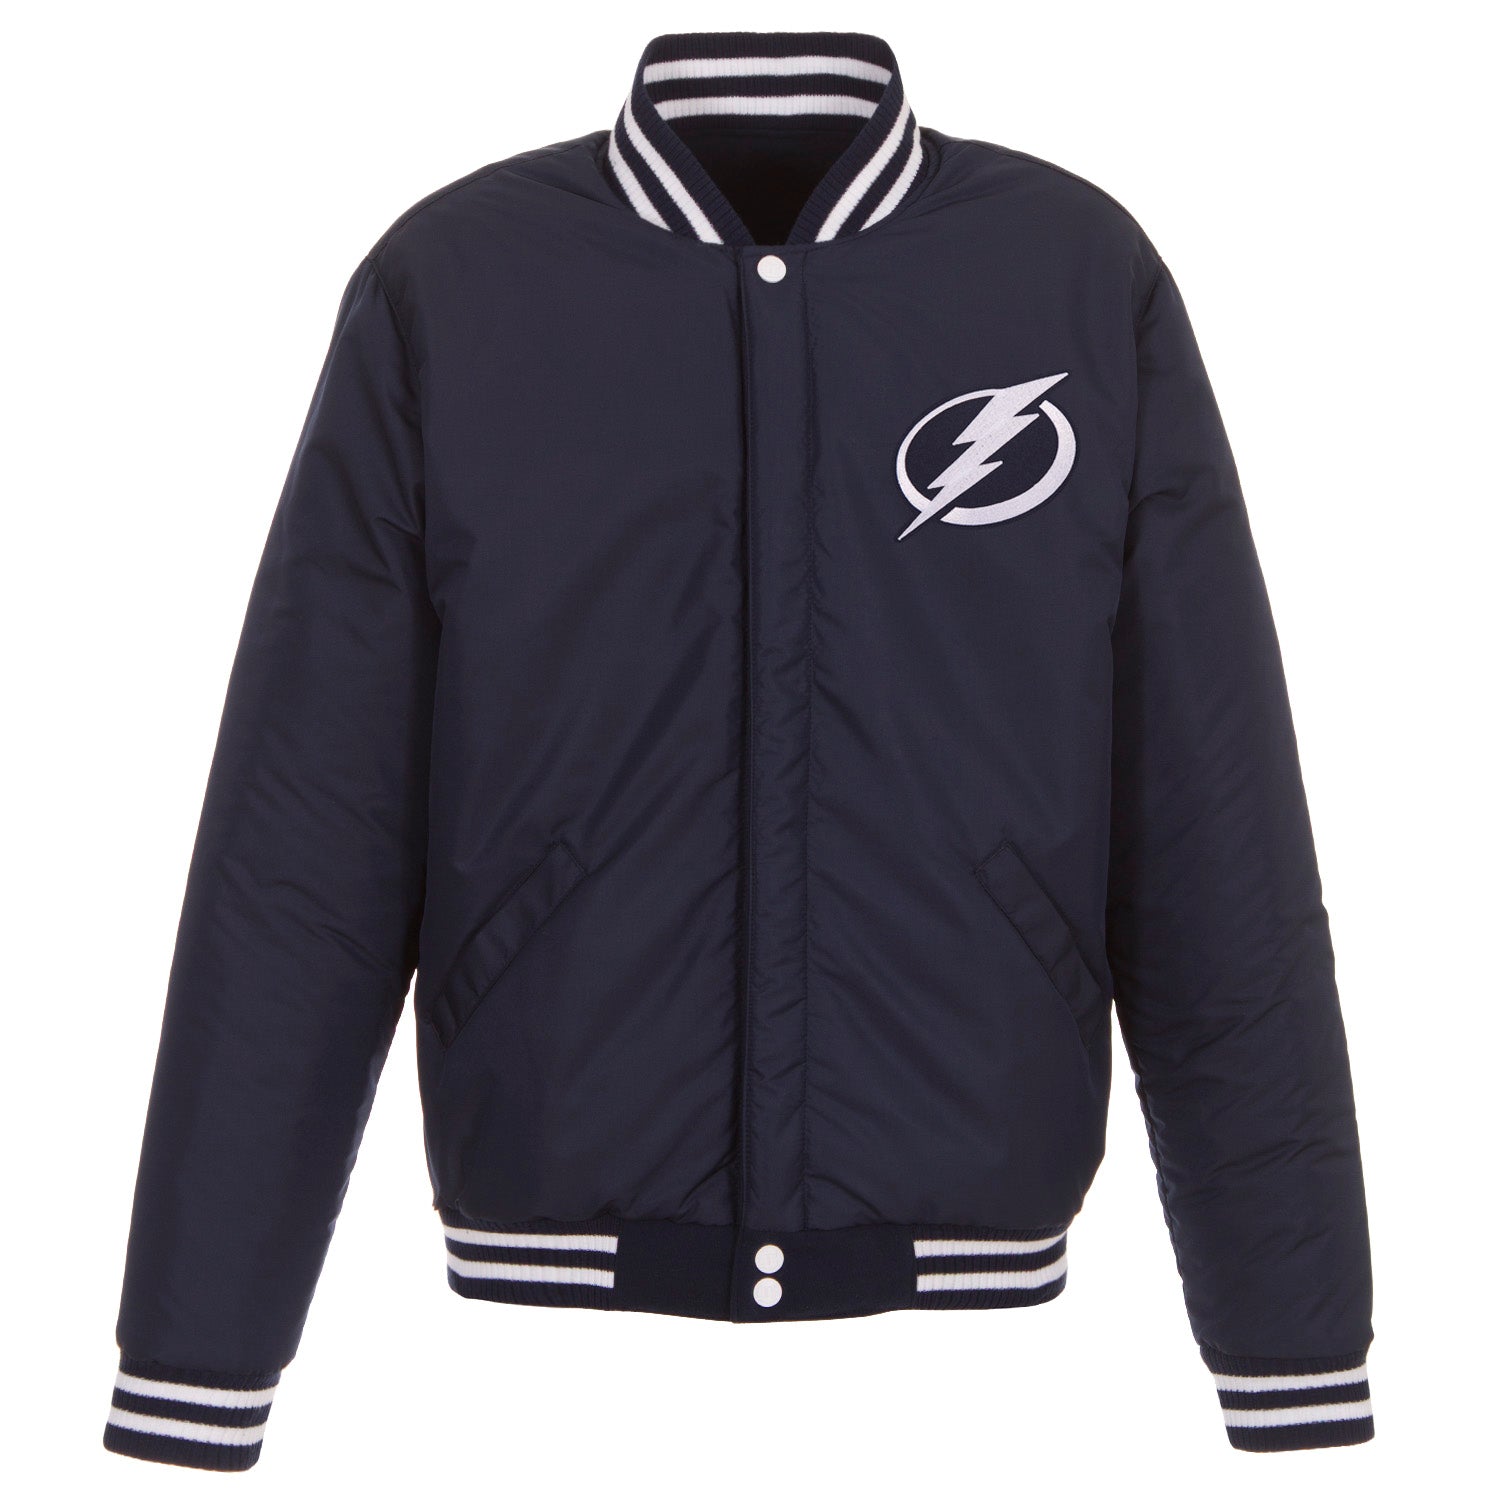 Tampa Bay Lightning JH Design Reversible Fleece Jacket with Faux